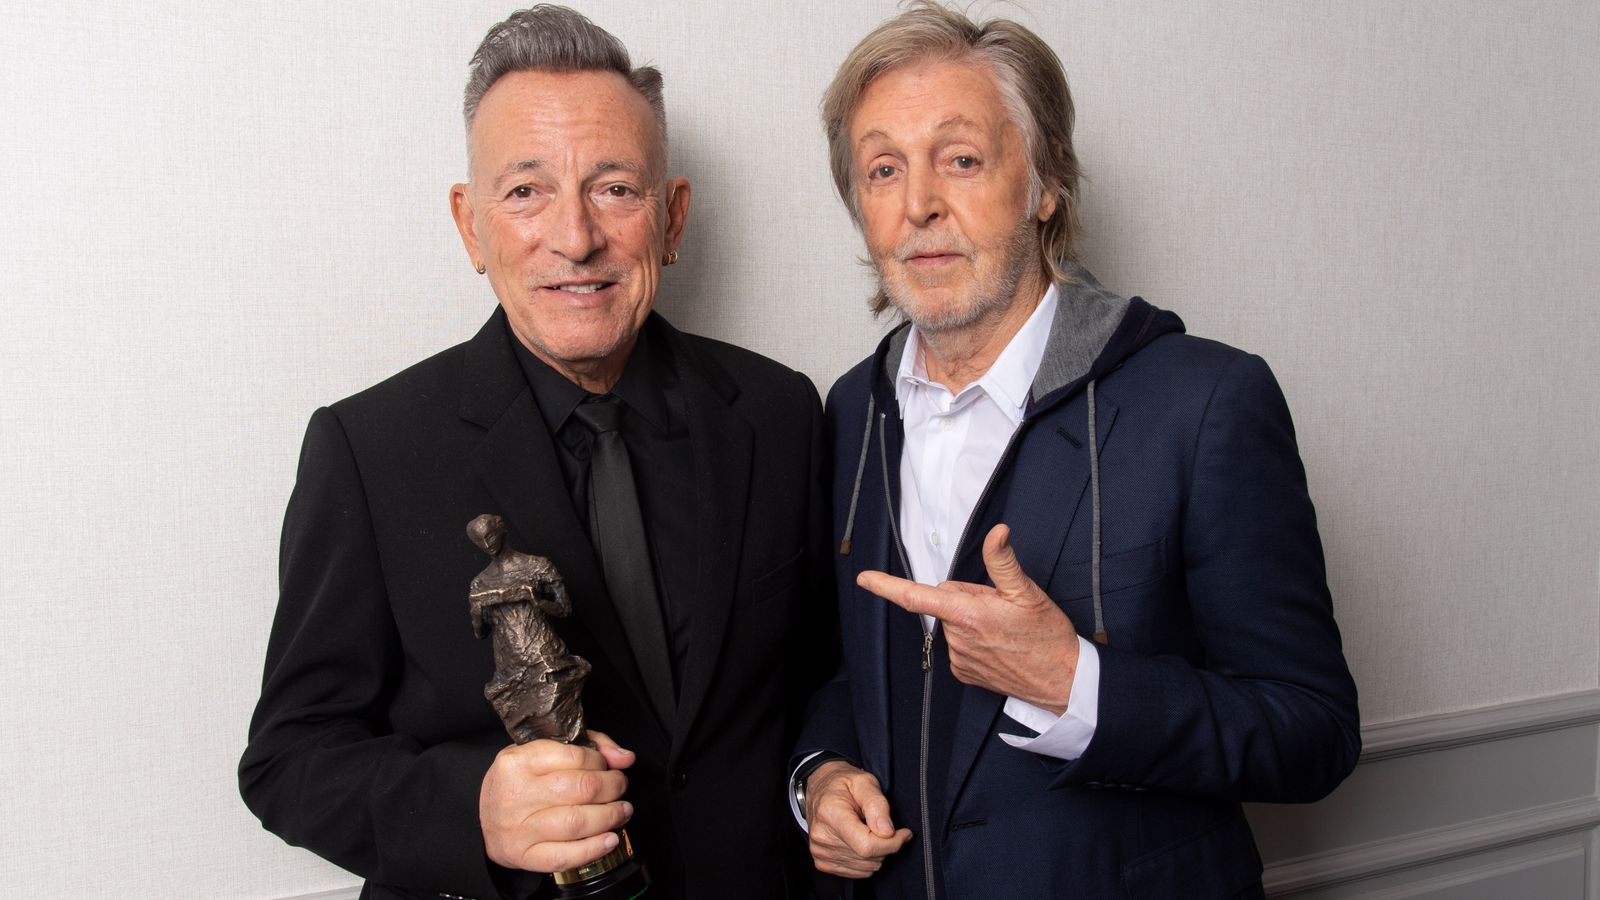 Bruce Springsteen honoured at Ivor Novello Awards by Sir Paul McCartney